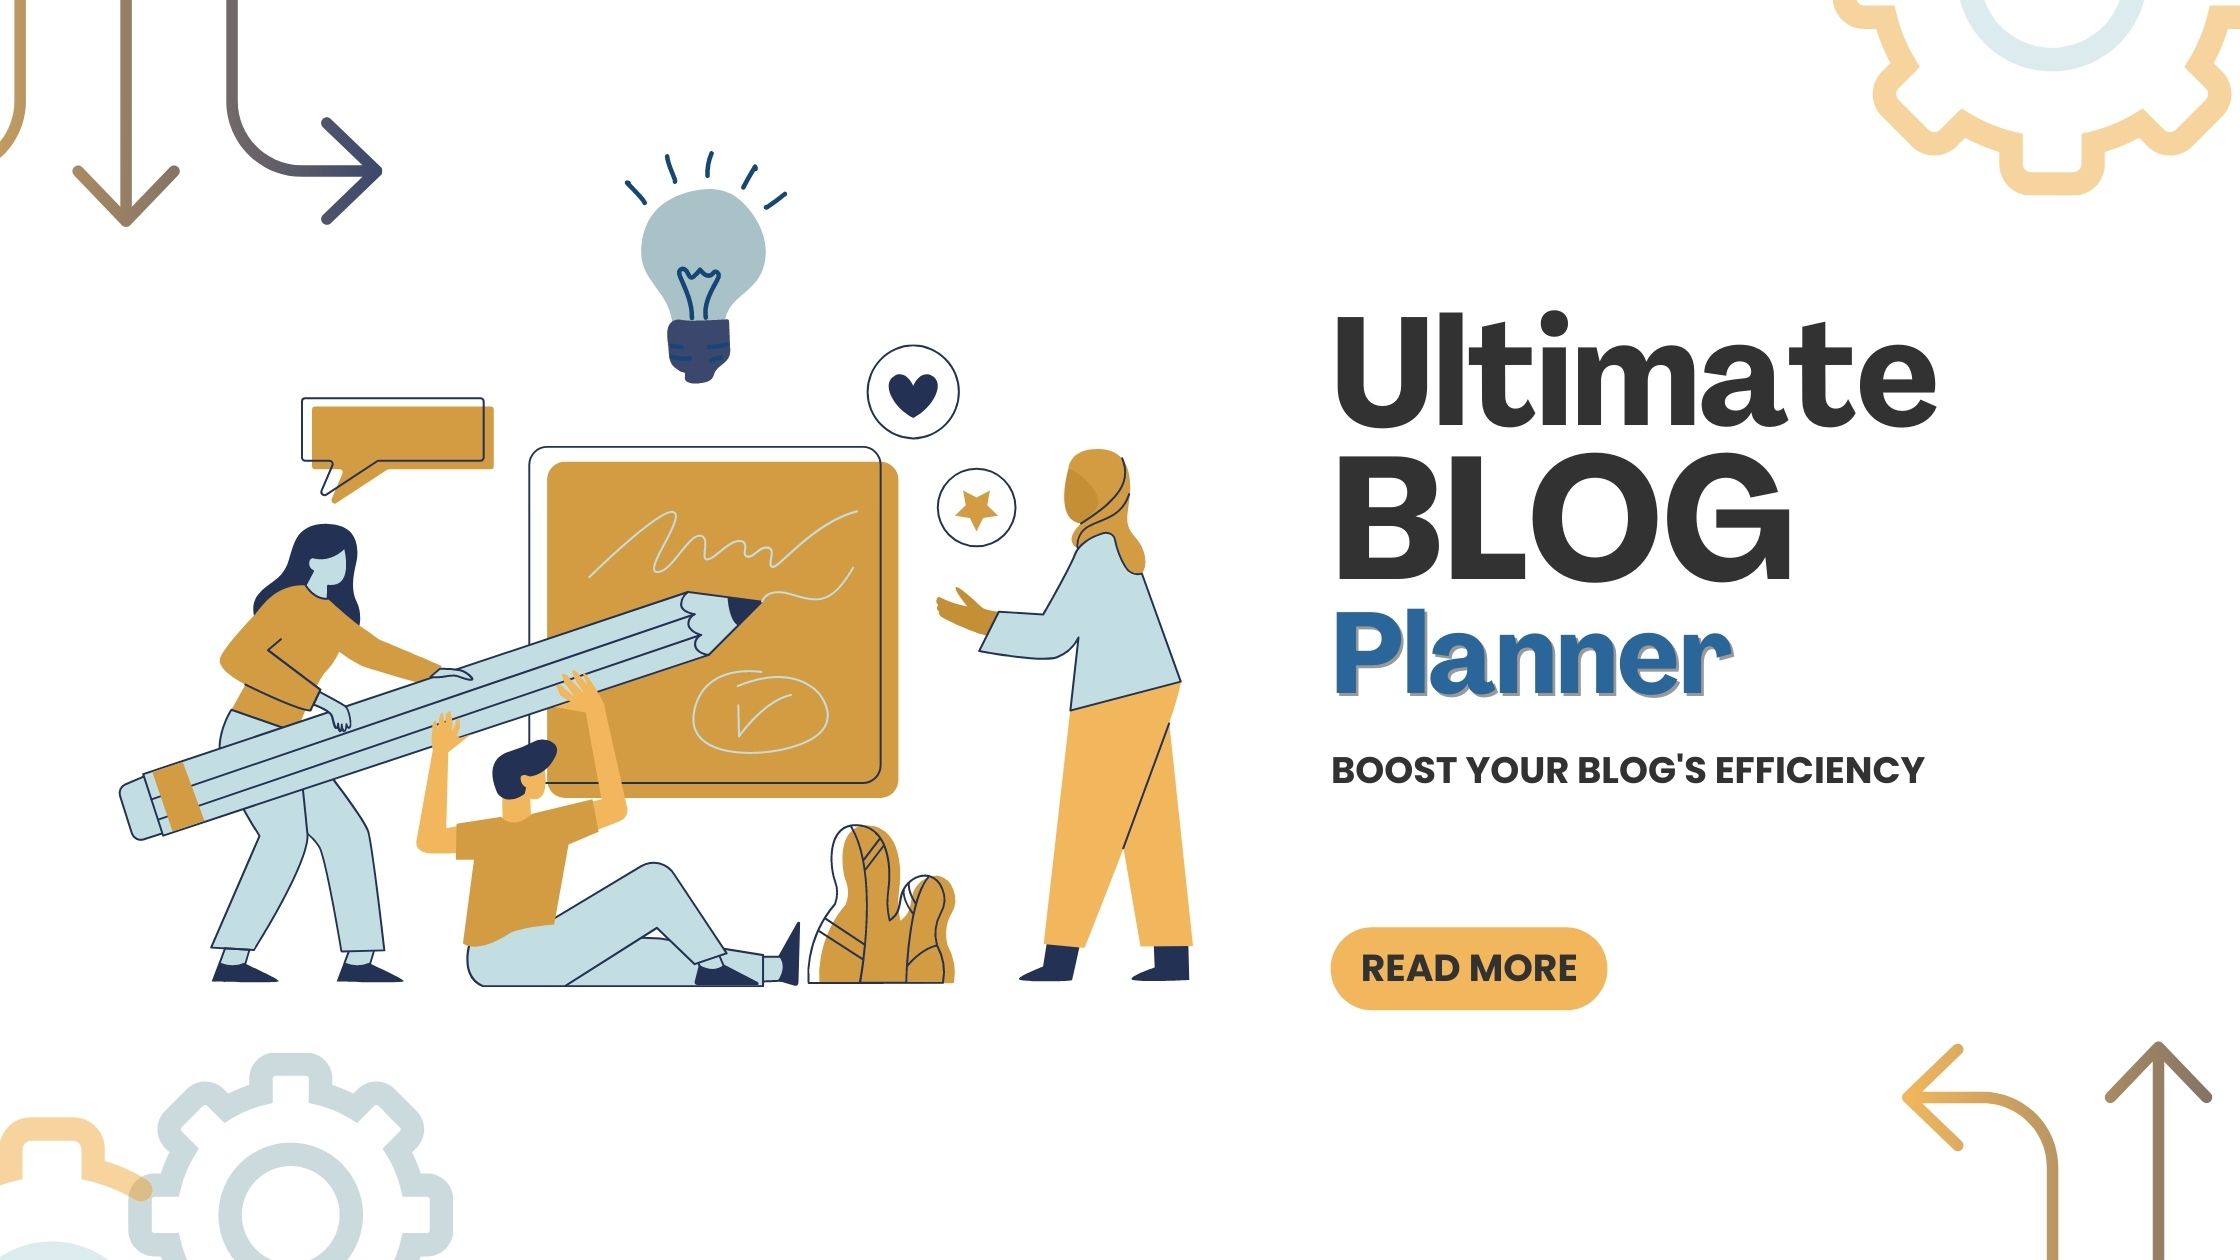 blog planner